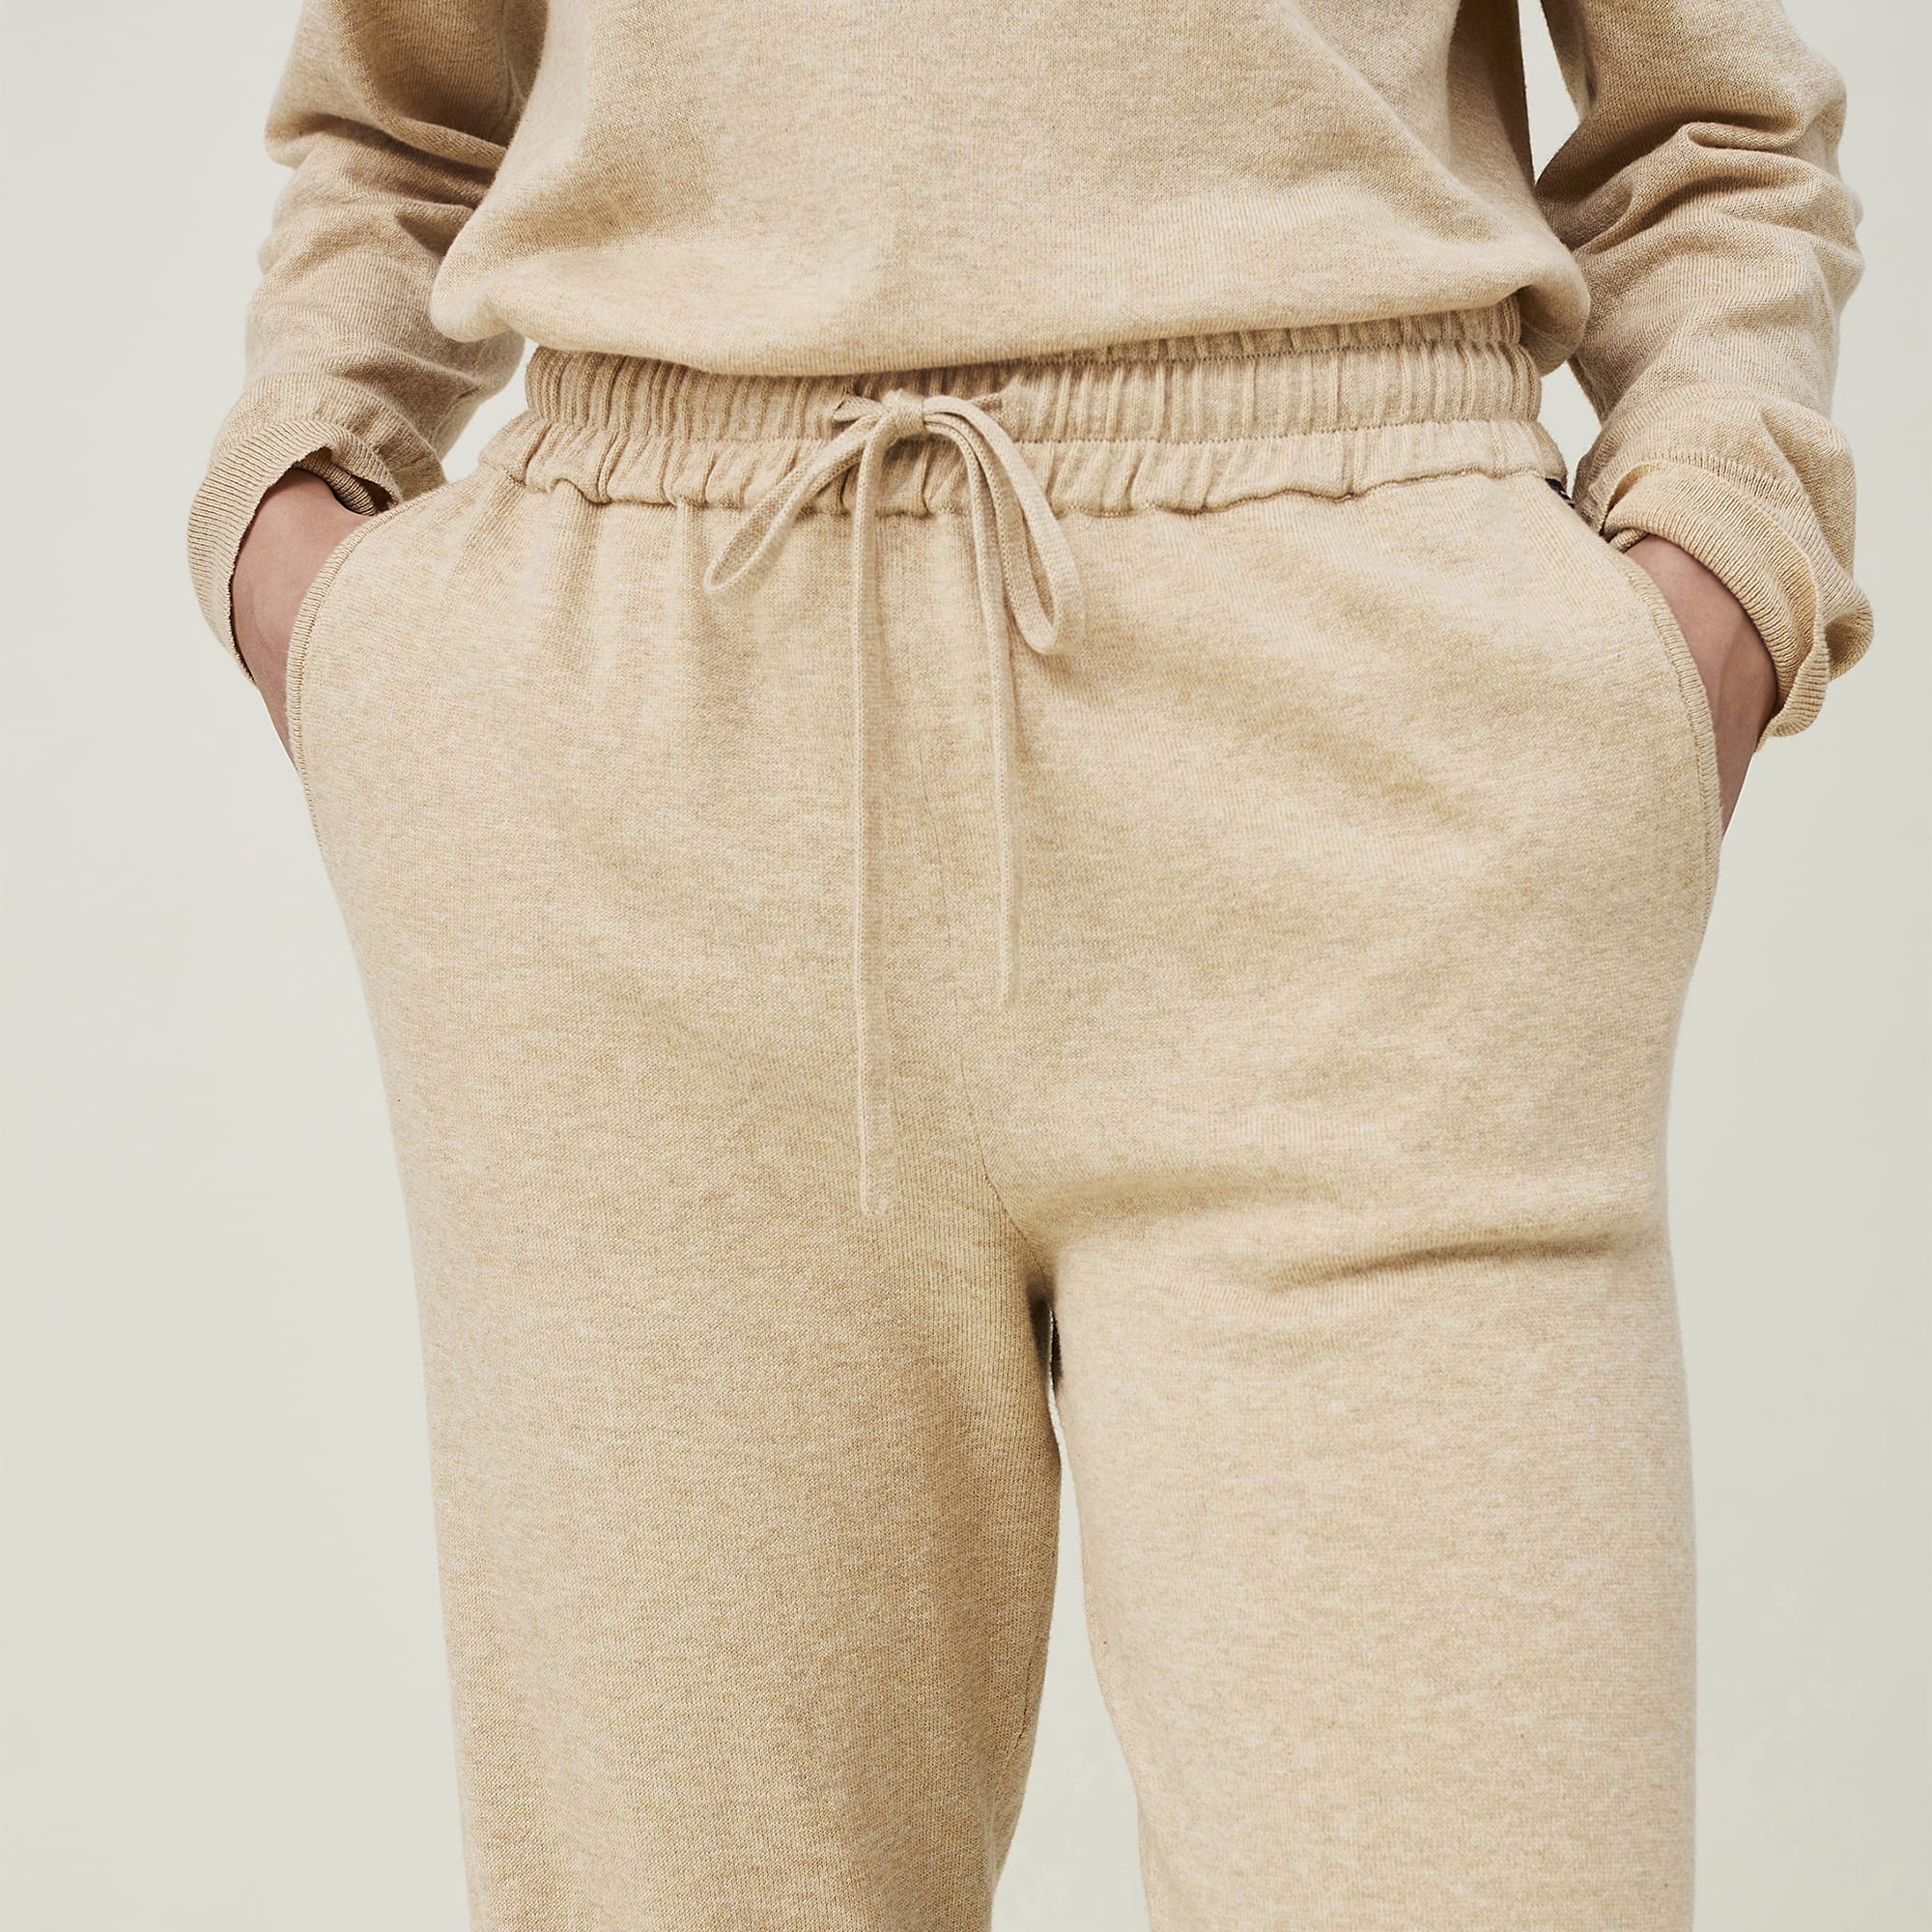 Elyssa Organic Cotton/lyocell Knitted Pants, light beige melange